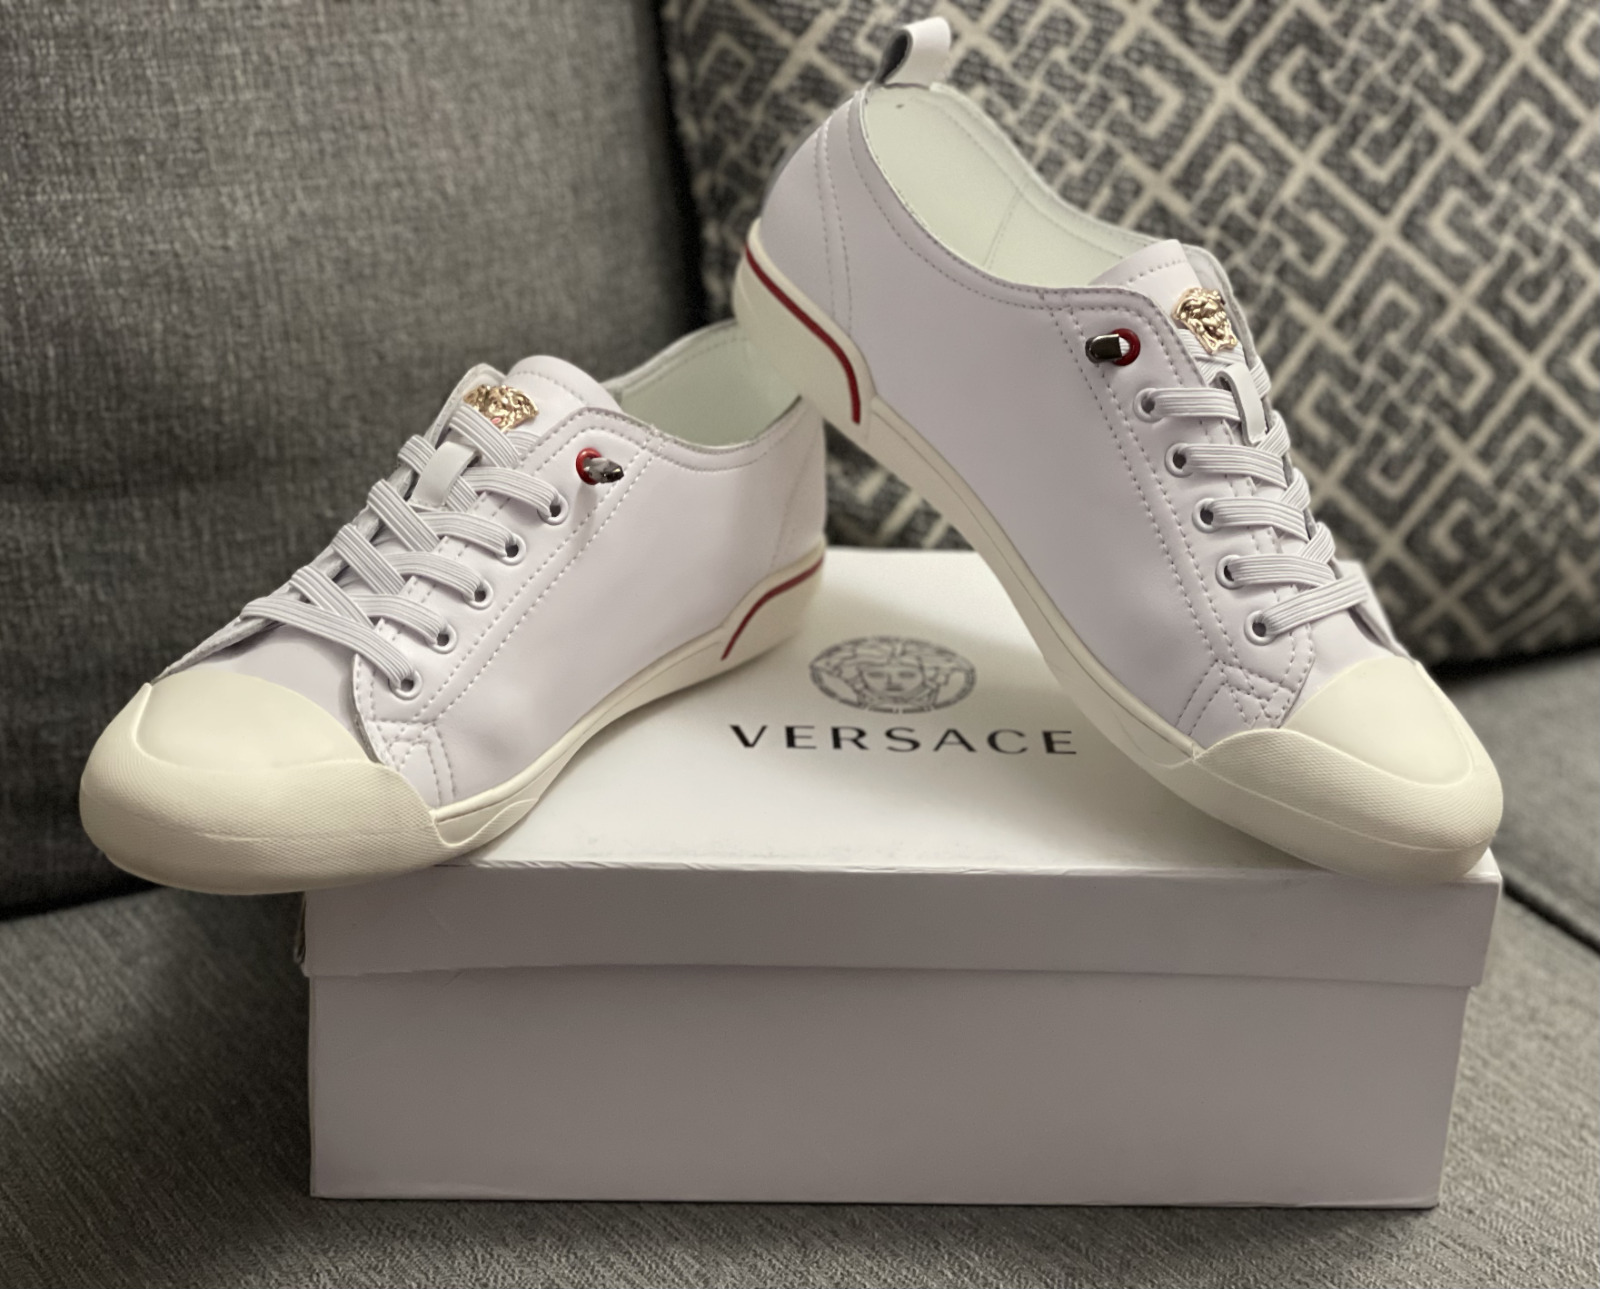 Versace Men’s White Sneakers Shoes Size 10 (EU 44)